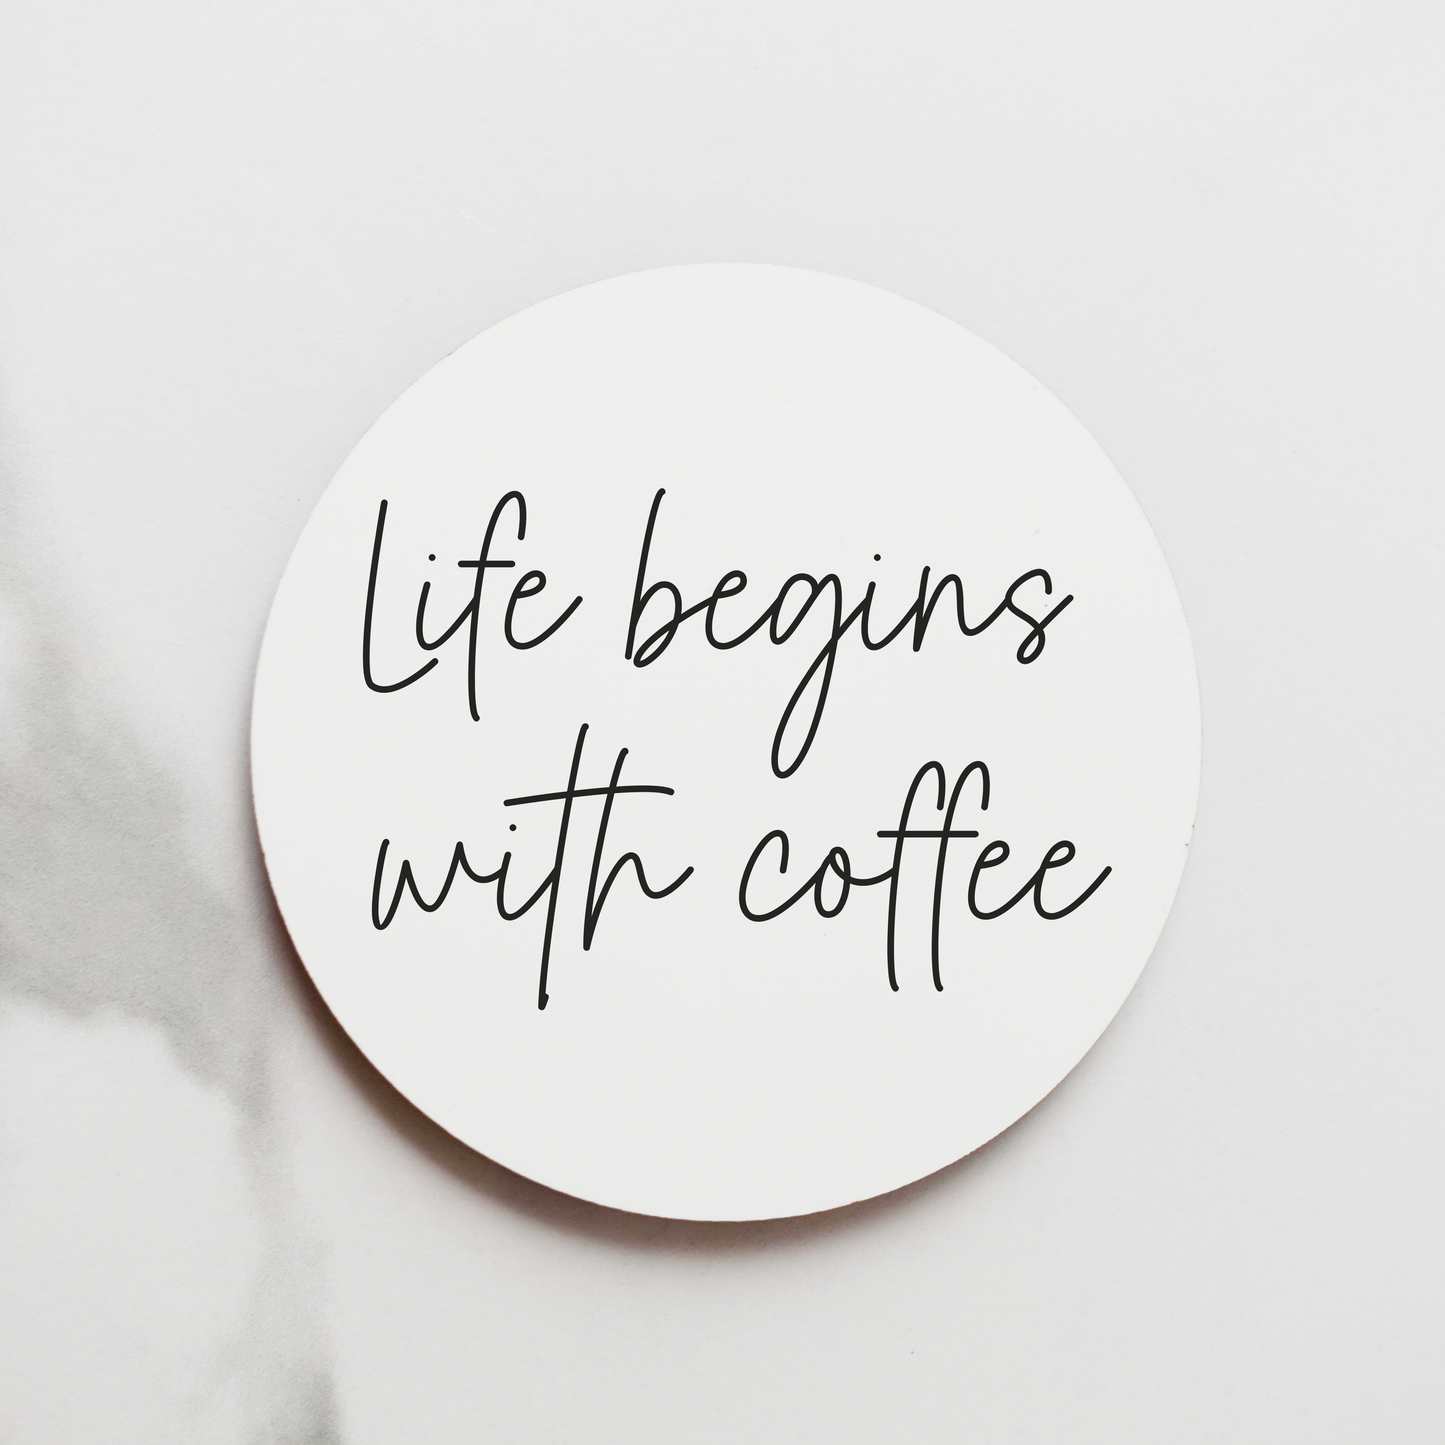 Onderzetter - Life begins with coffee